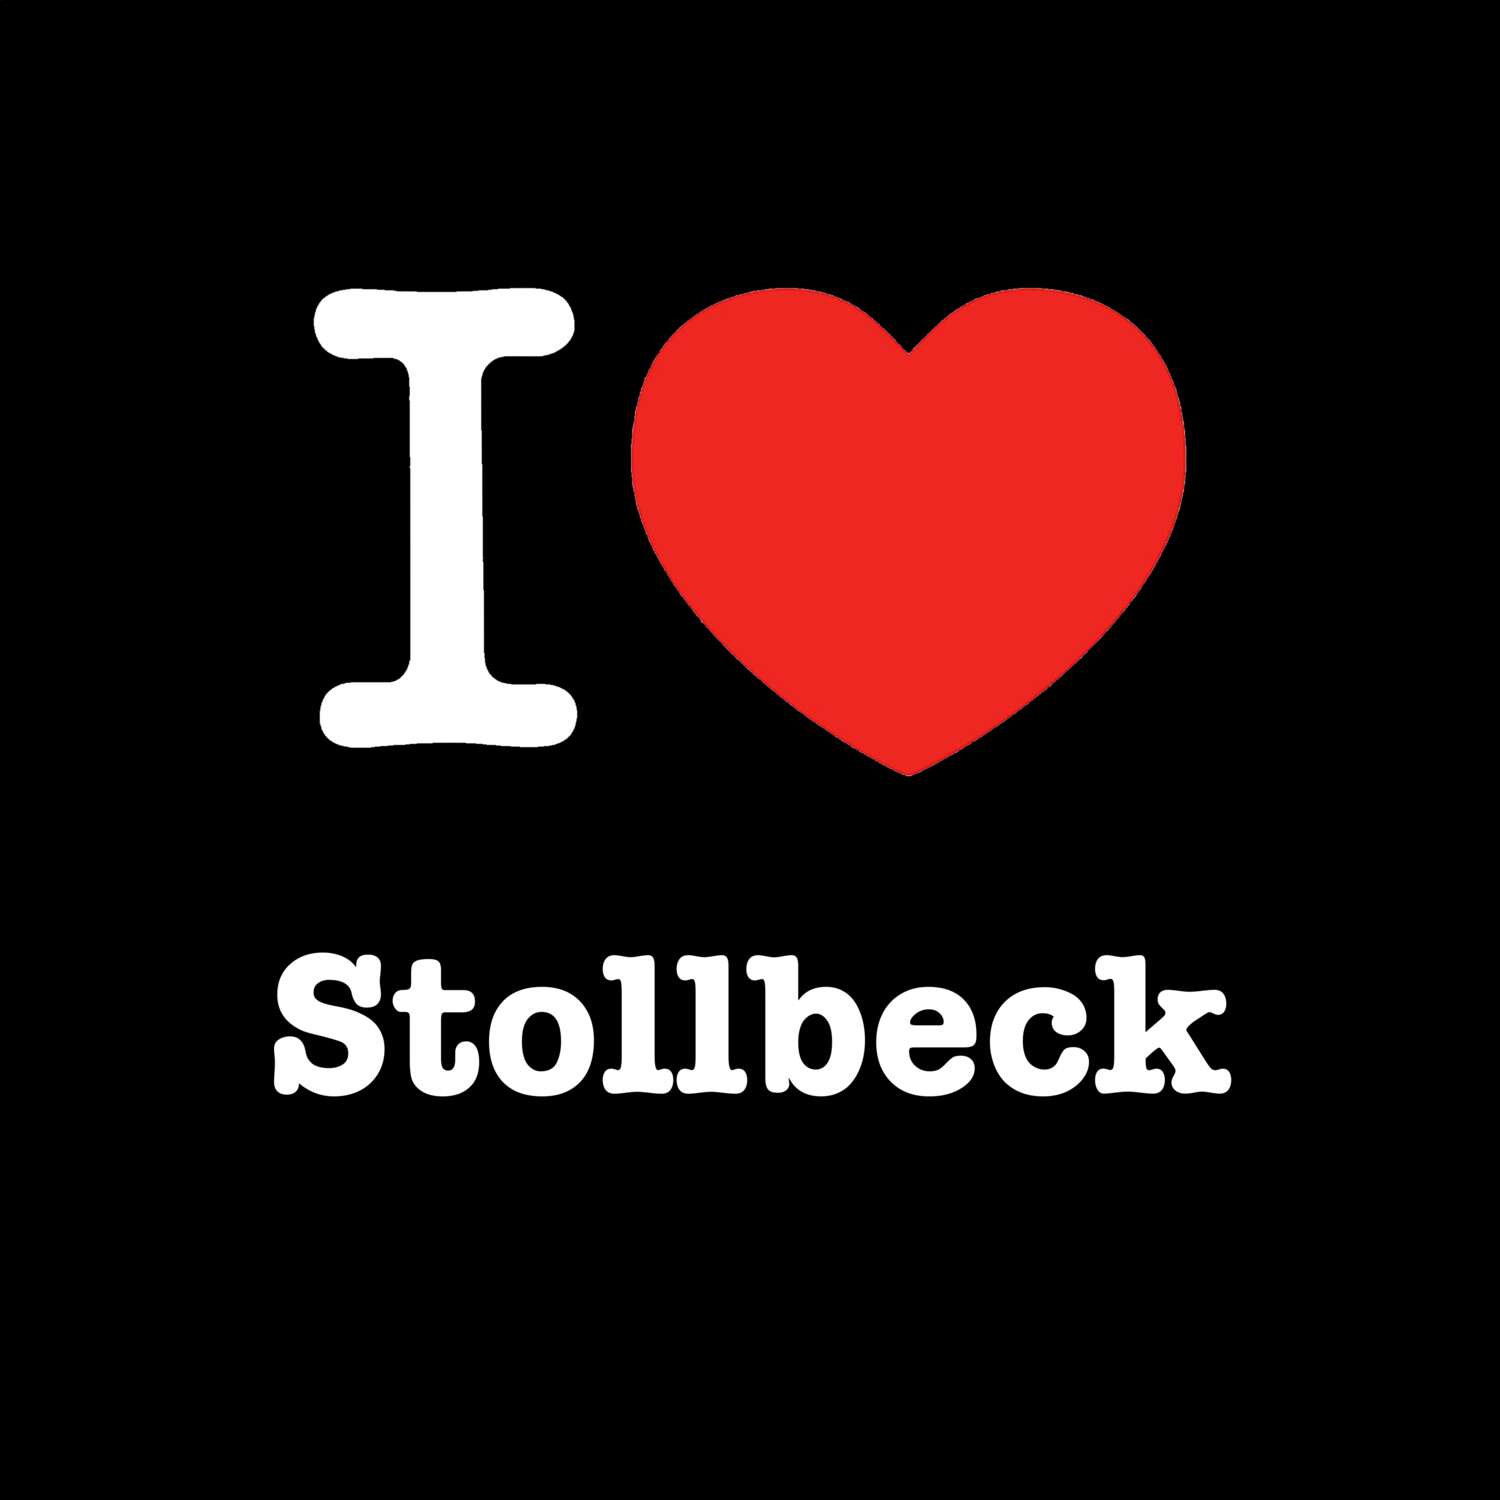 Stollbeck T-Shirt »I love«